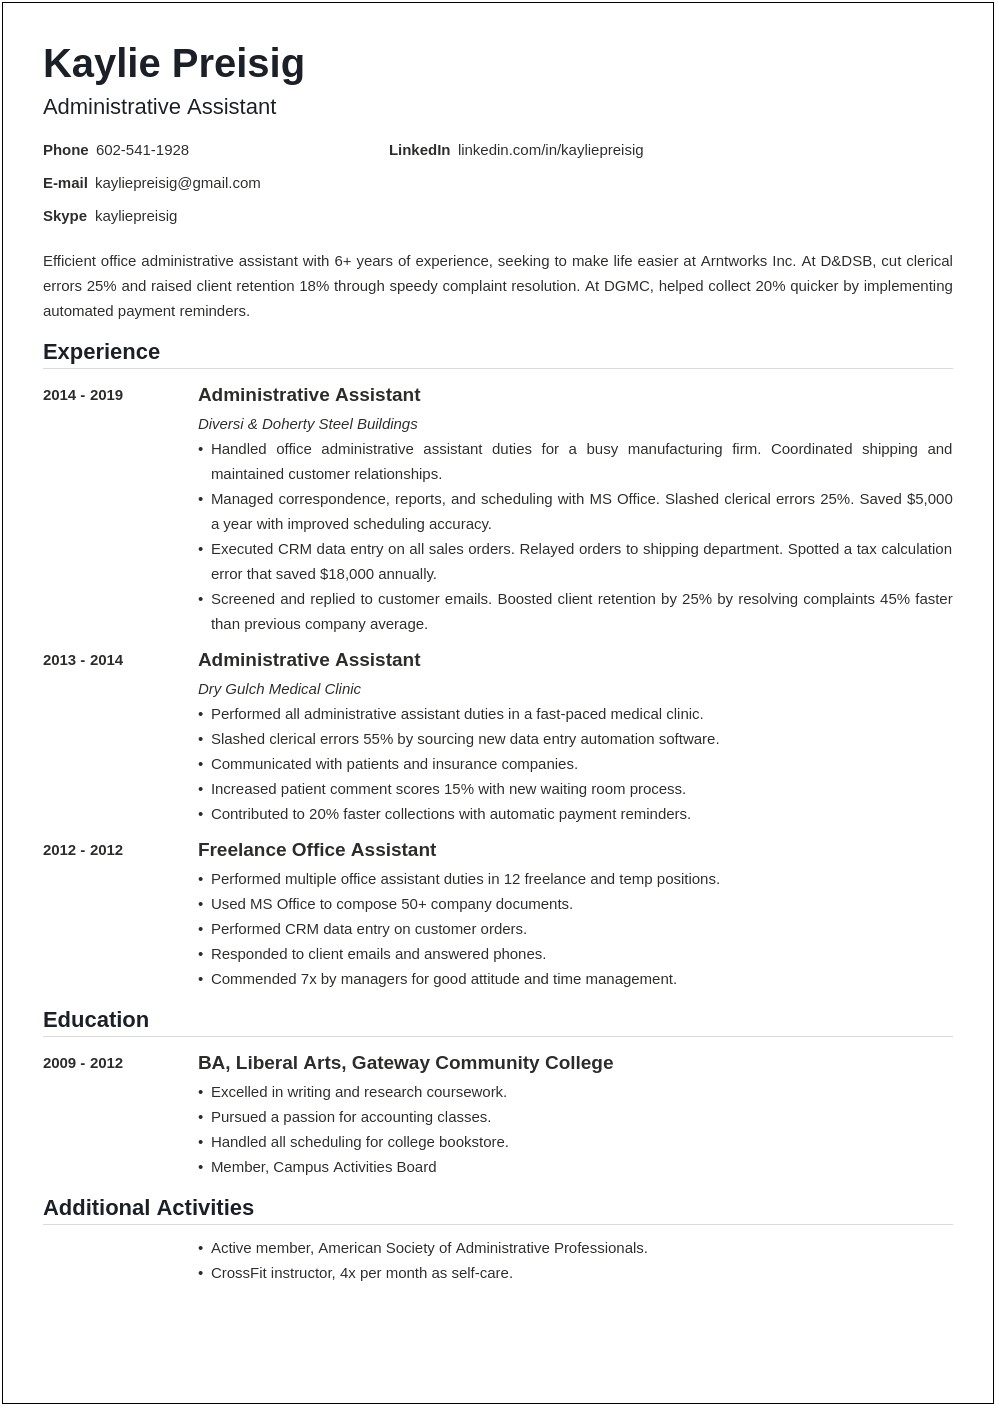 Administrative Assistant Description Of Duties For A Resume